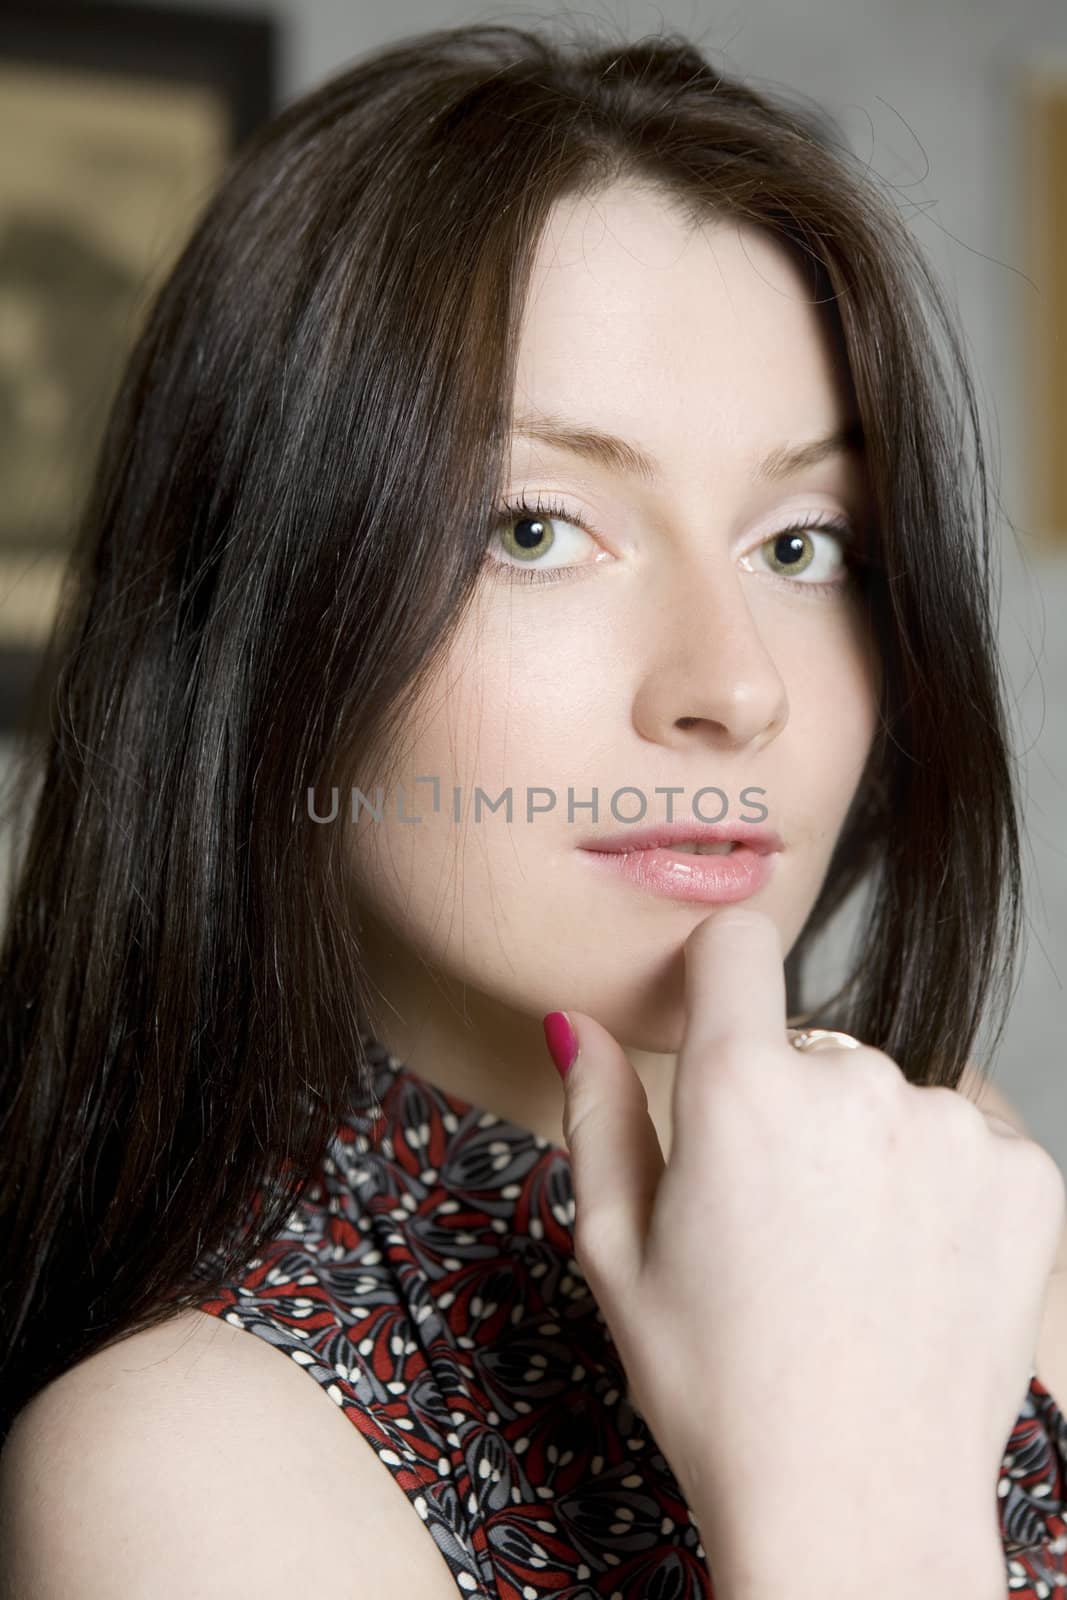  young serious  attractive woman by elenarostunova